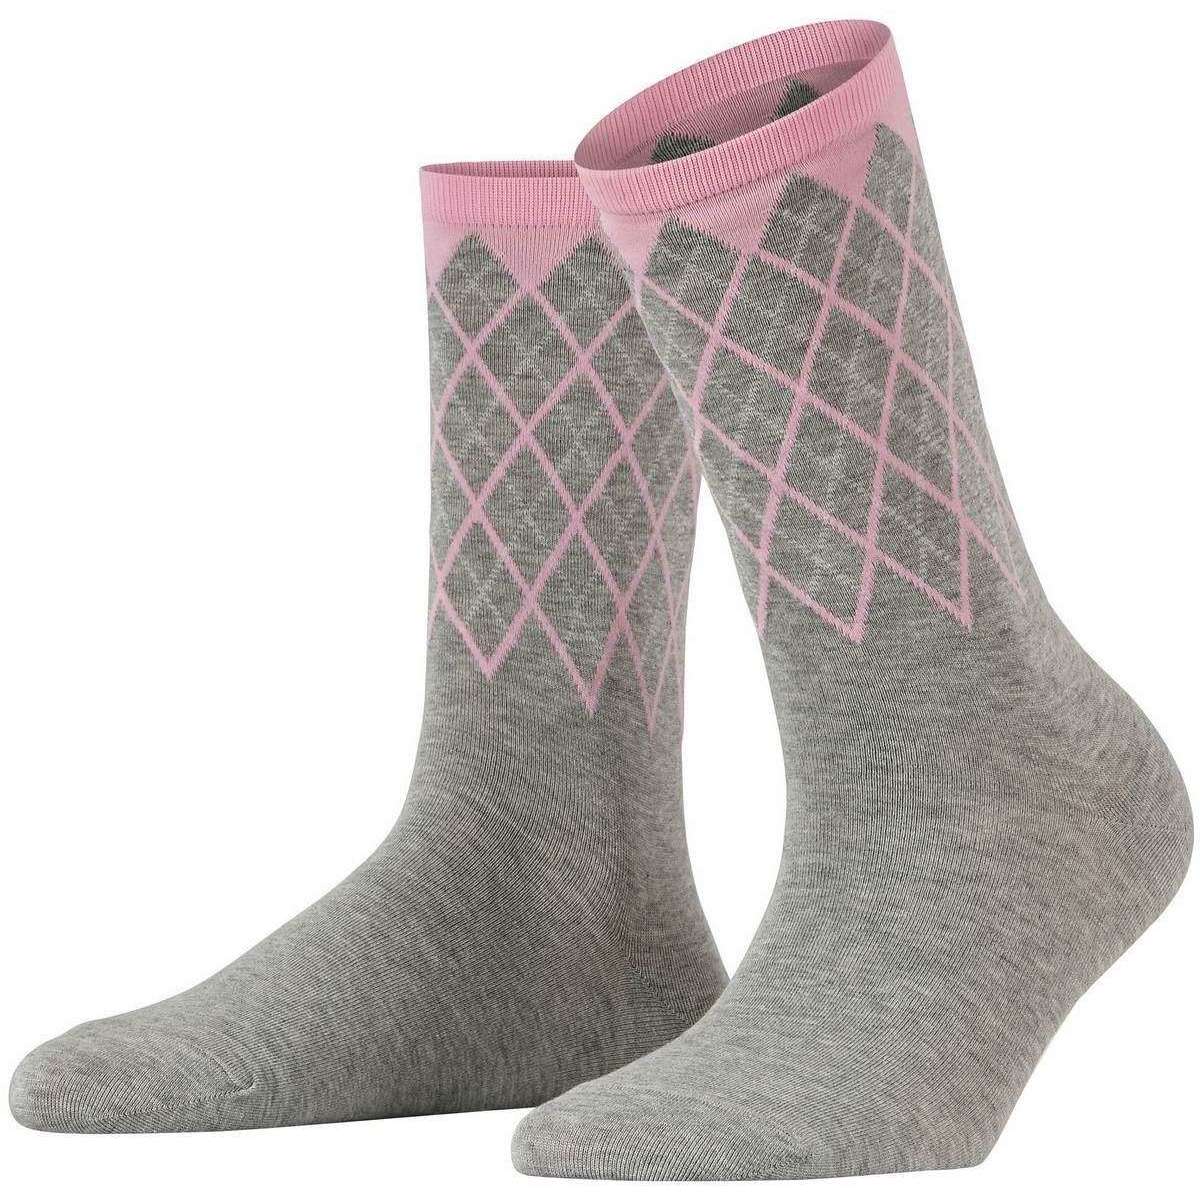 Burlington Mayfair Socks - Light Grey/Pink